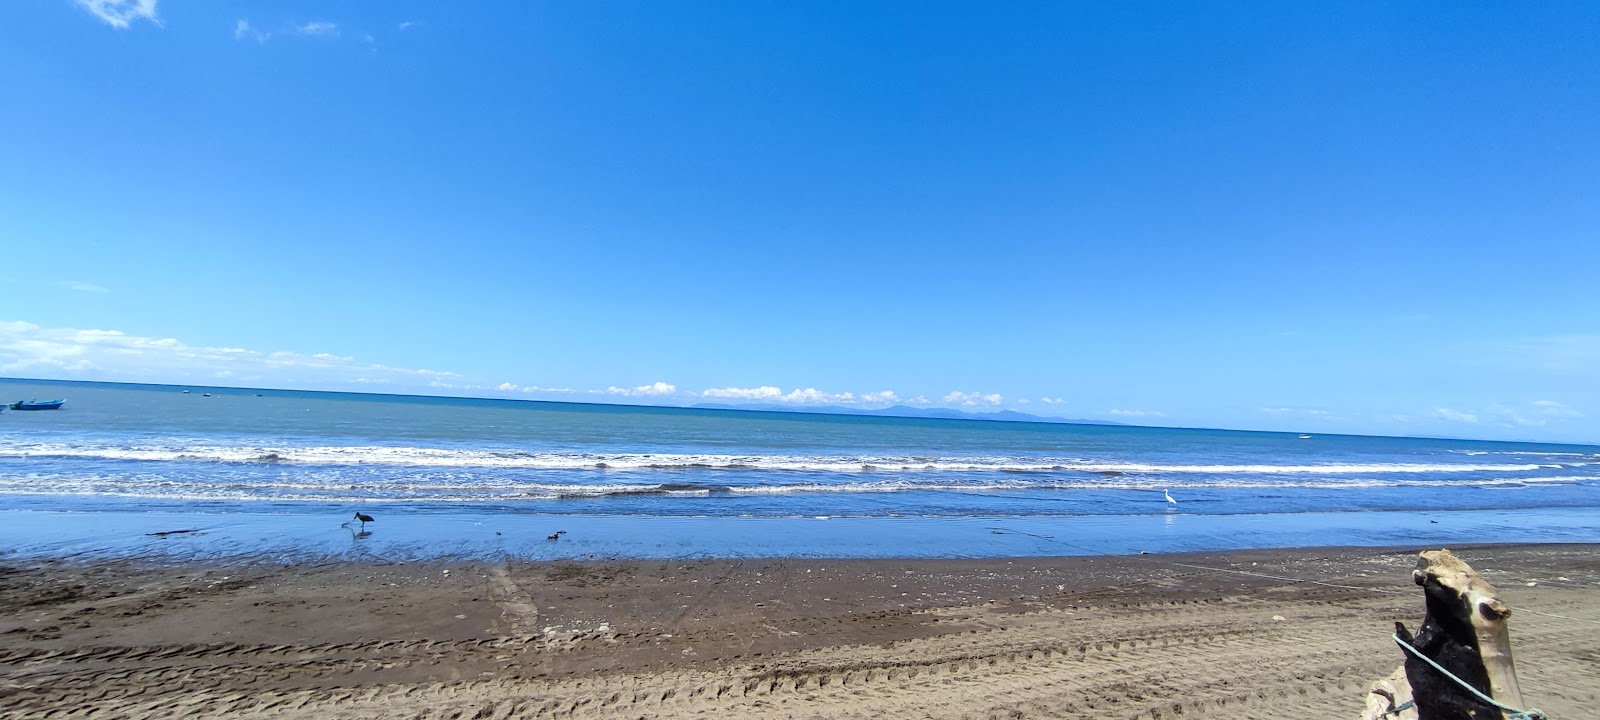 Foto de Playa Tarcoles com água turquesa superfície